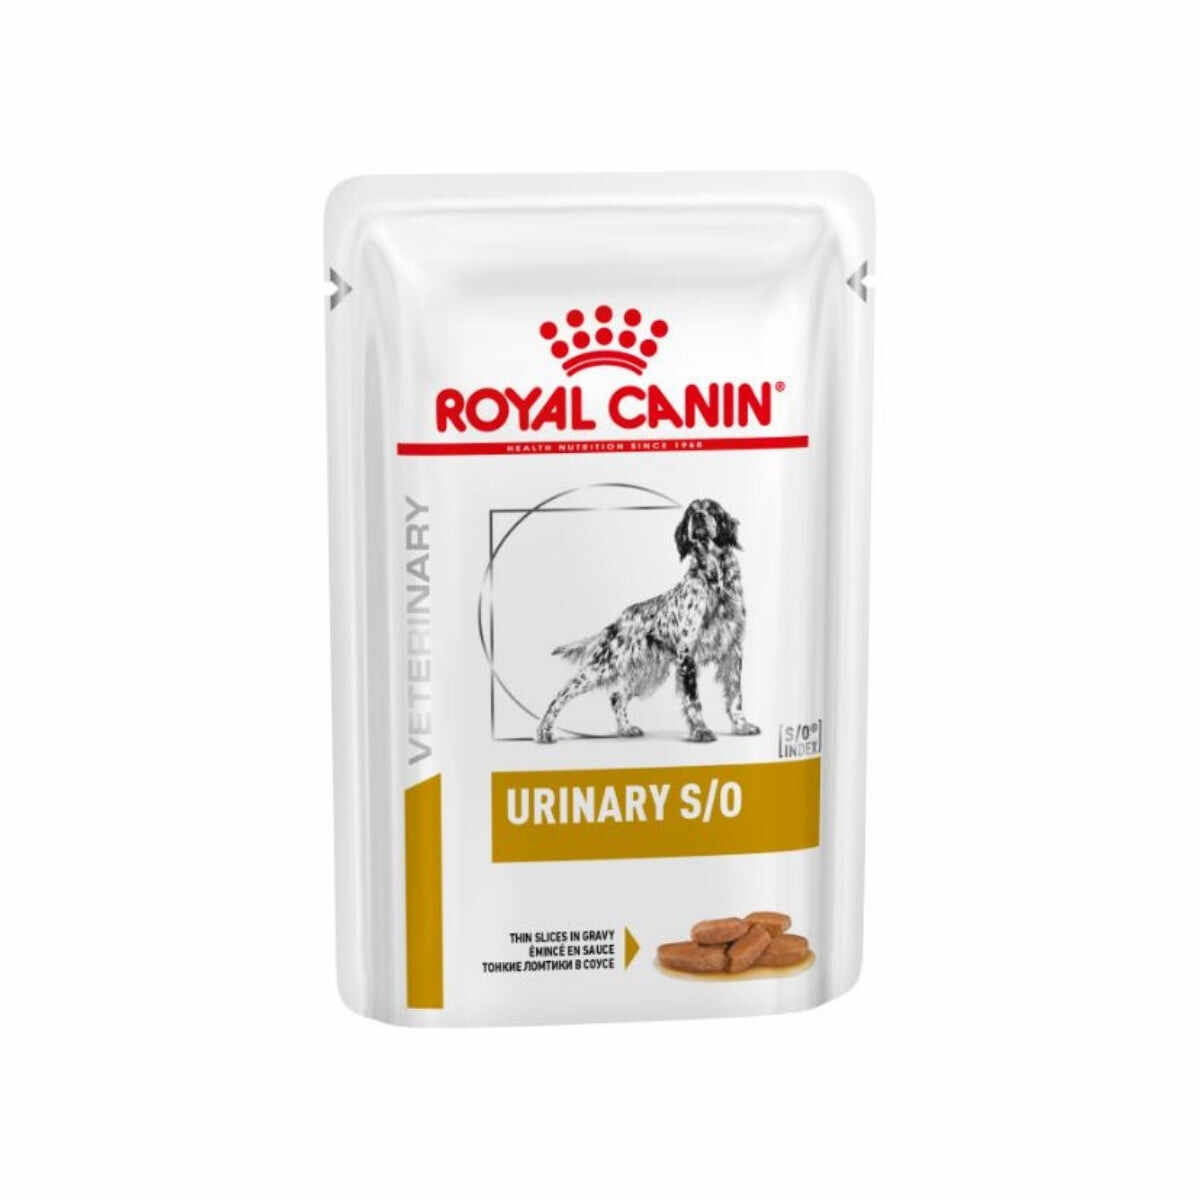 Royal Canin - Canine Urinary S/O Pouch 100g